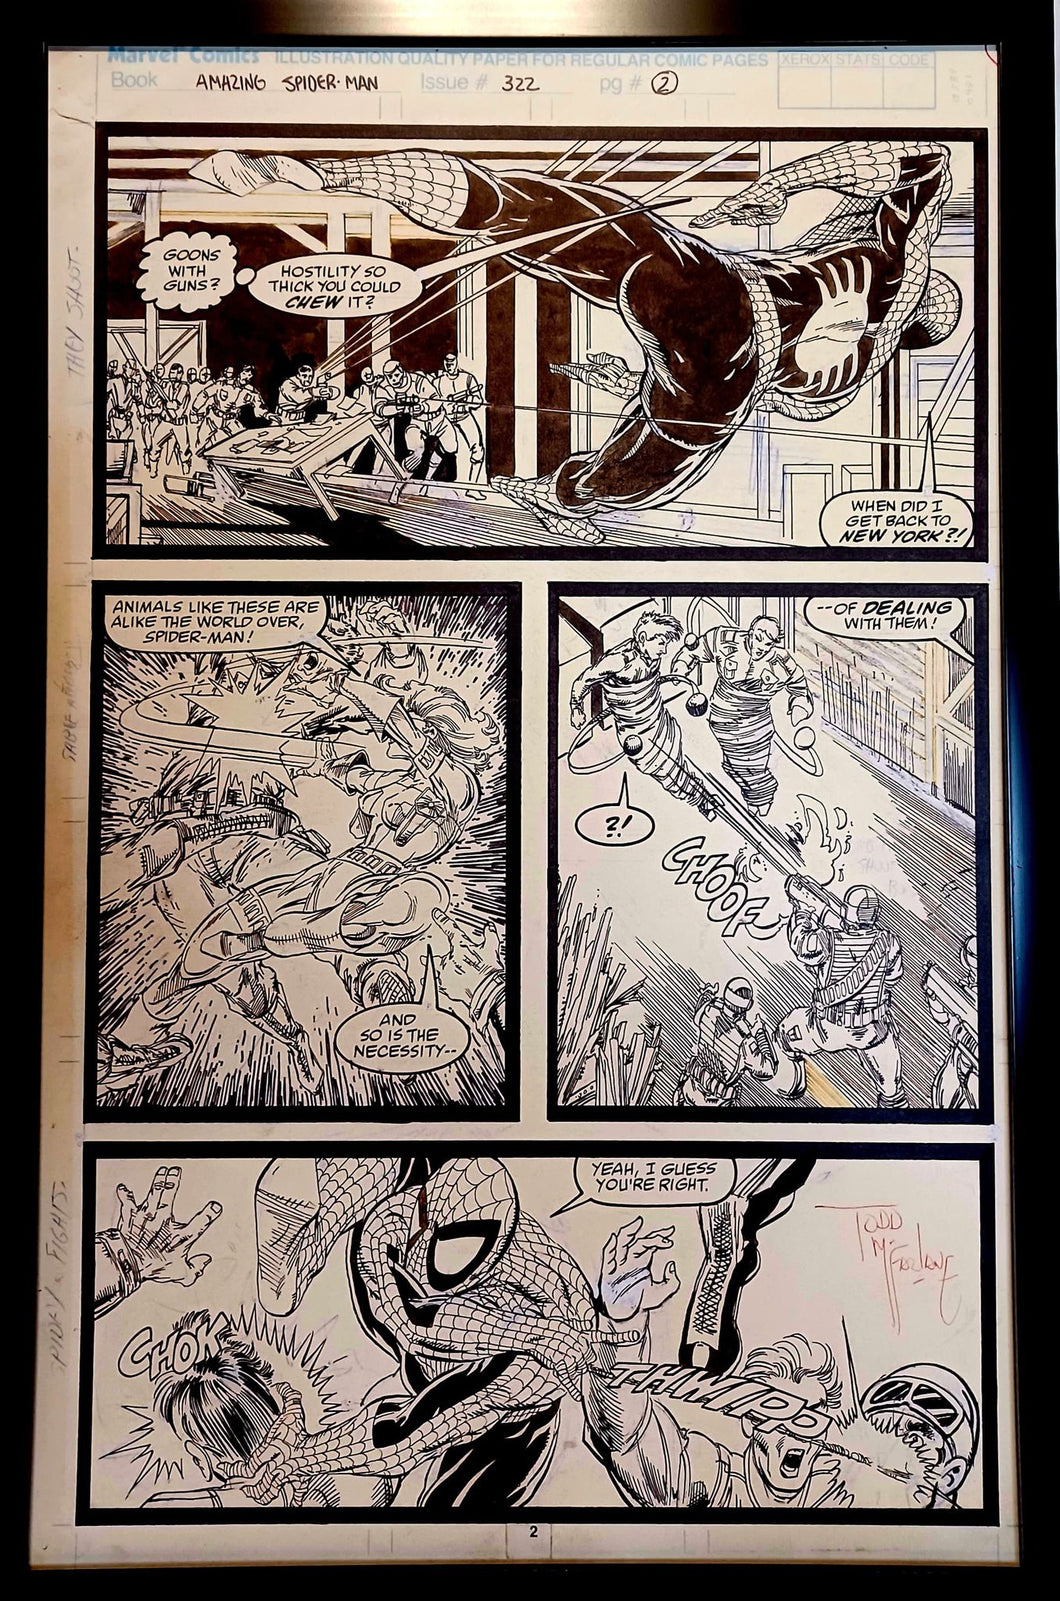 Amazing Spider-Man #322 pg. 2 by Todd McFarlane 11x17 FRAMED Original Art Print Comic Poster